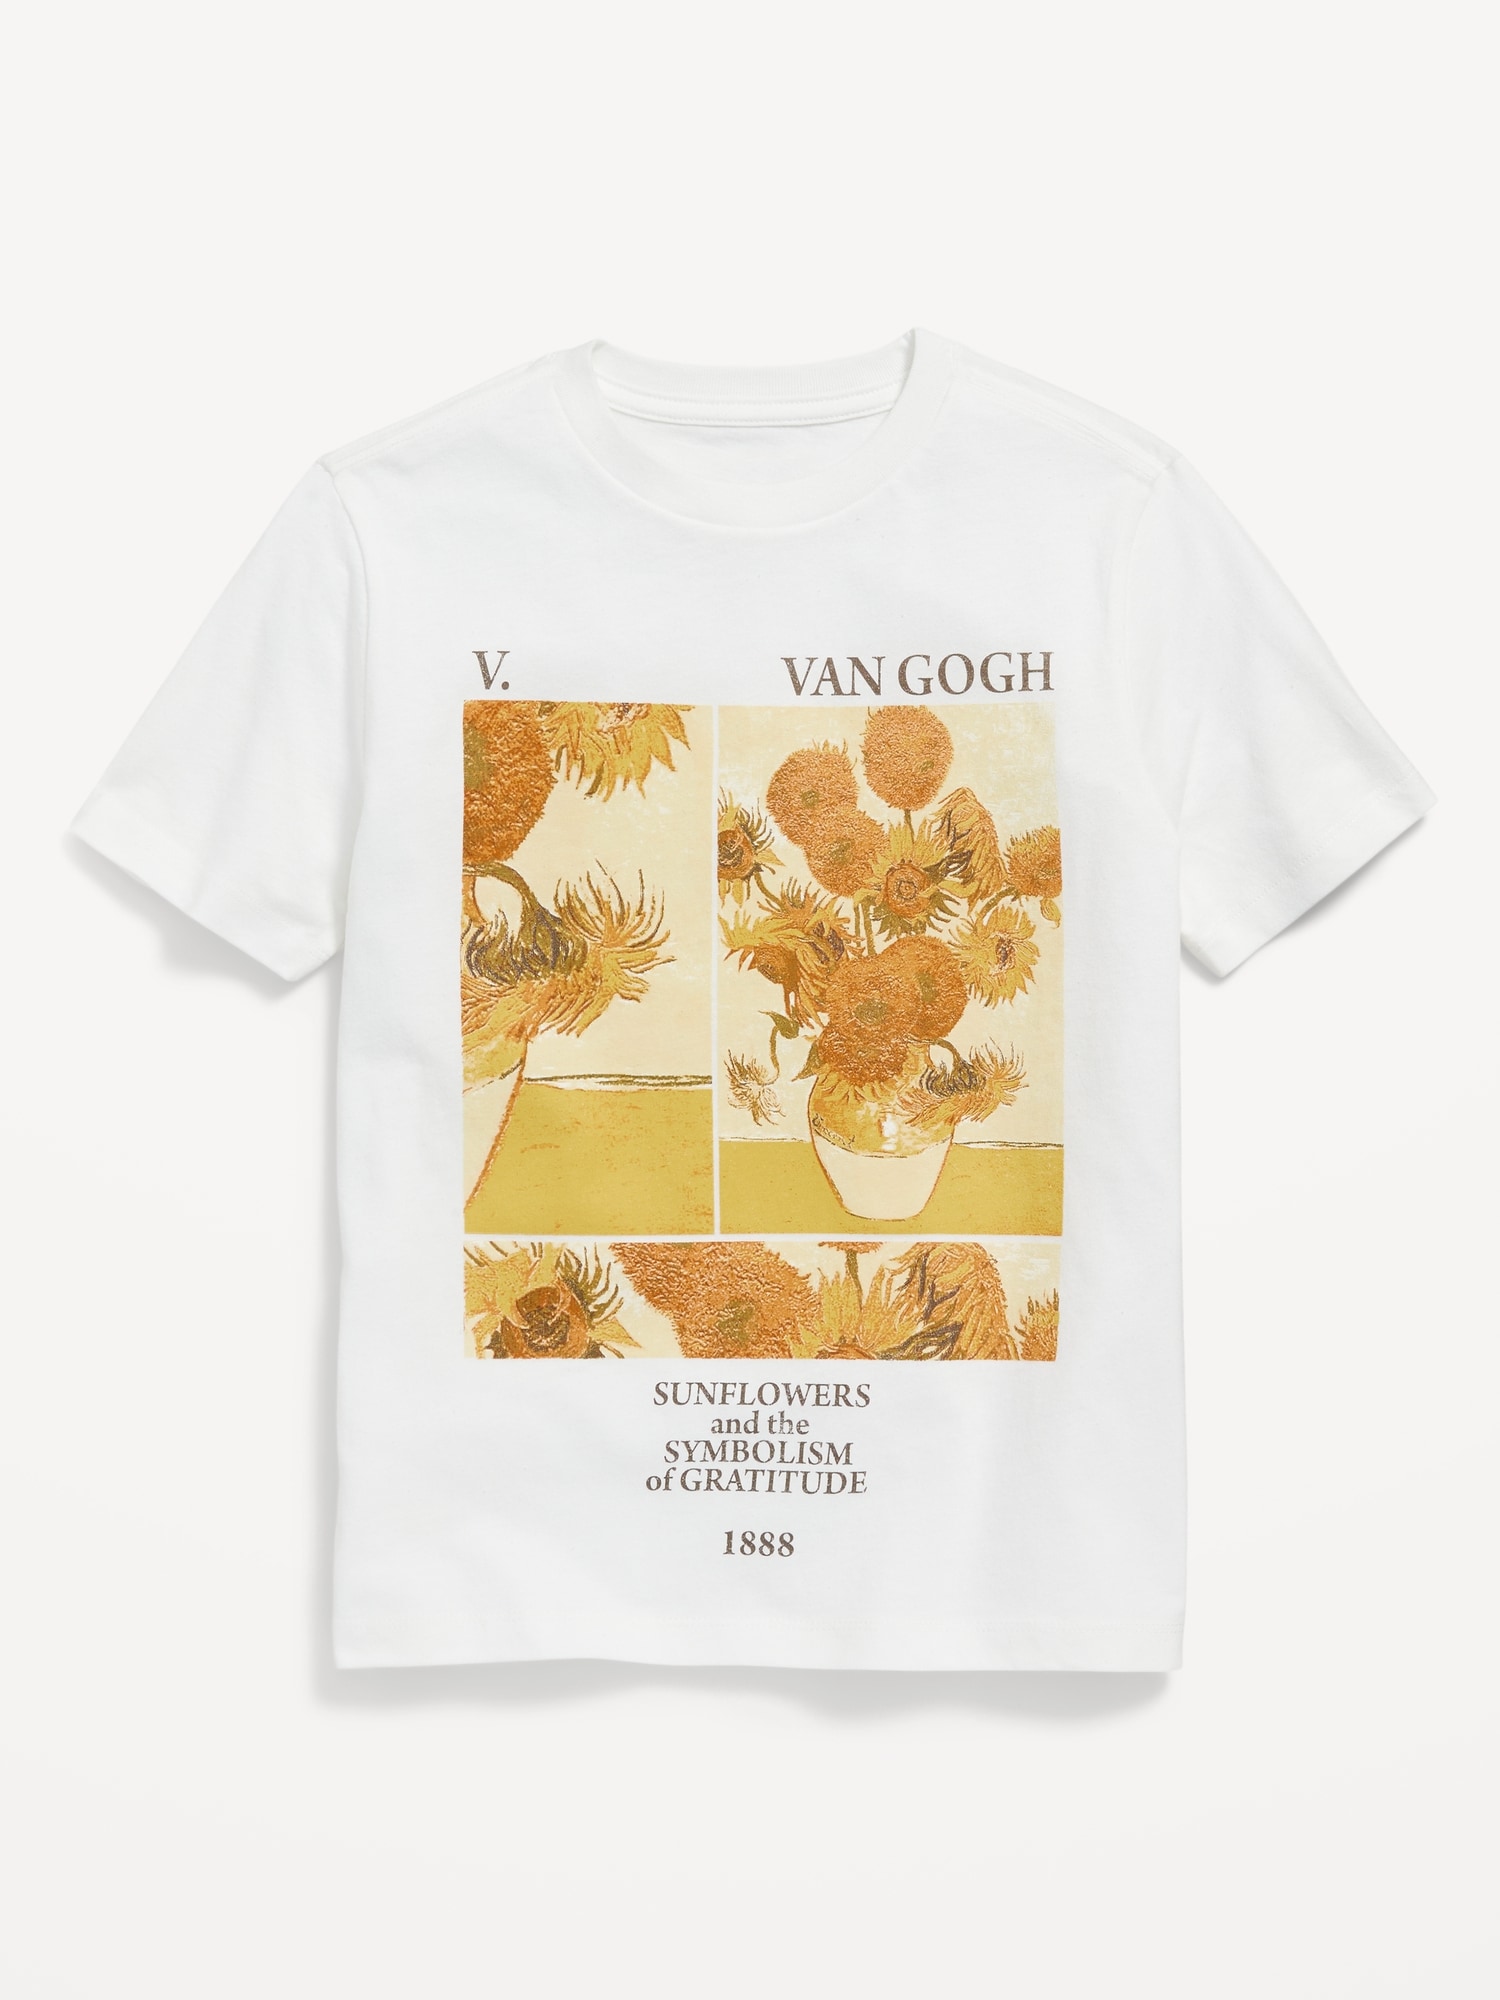 Matching Van Gogh Gender-Neutral Graphic T-Shirt for Kids